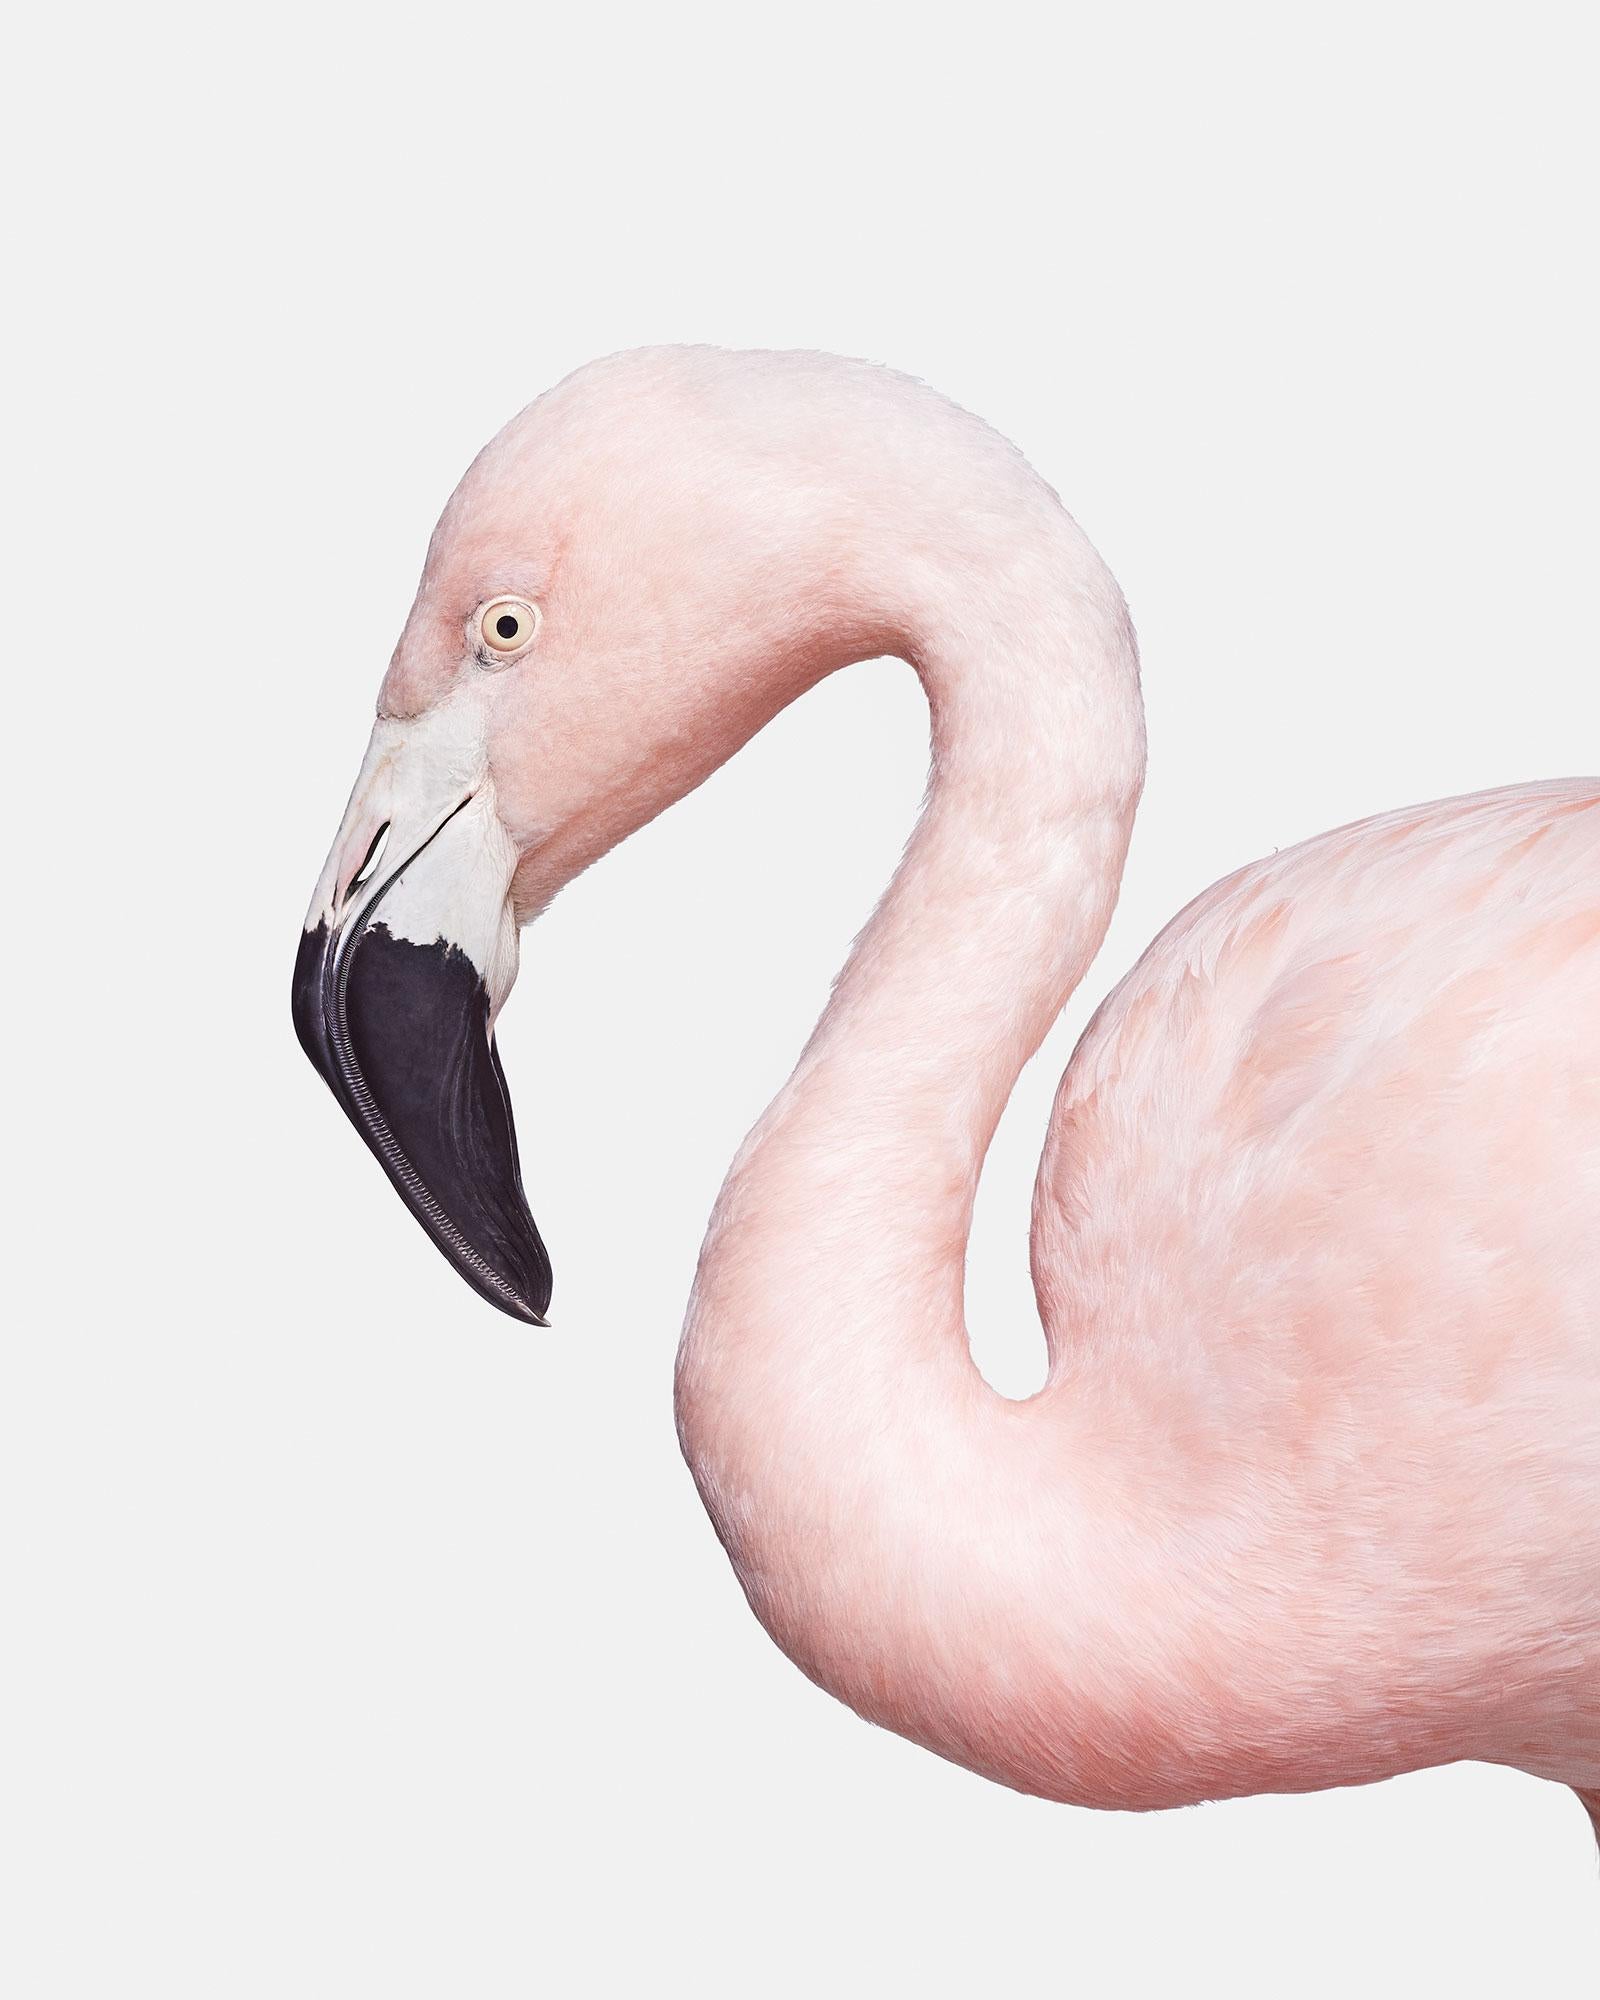 Randal Ford - Flamingo n° 1, photographie 2018